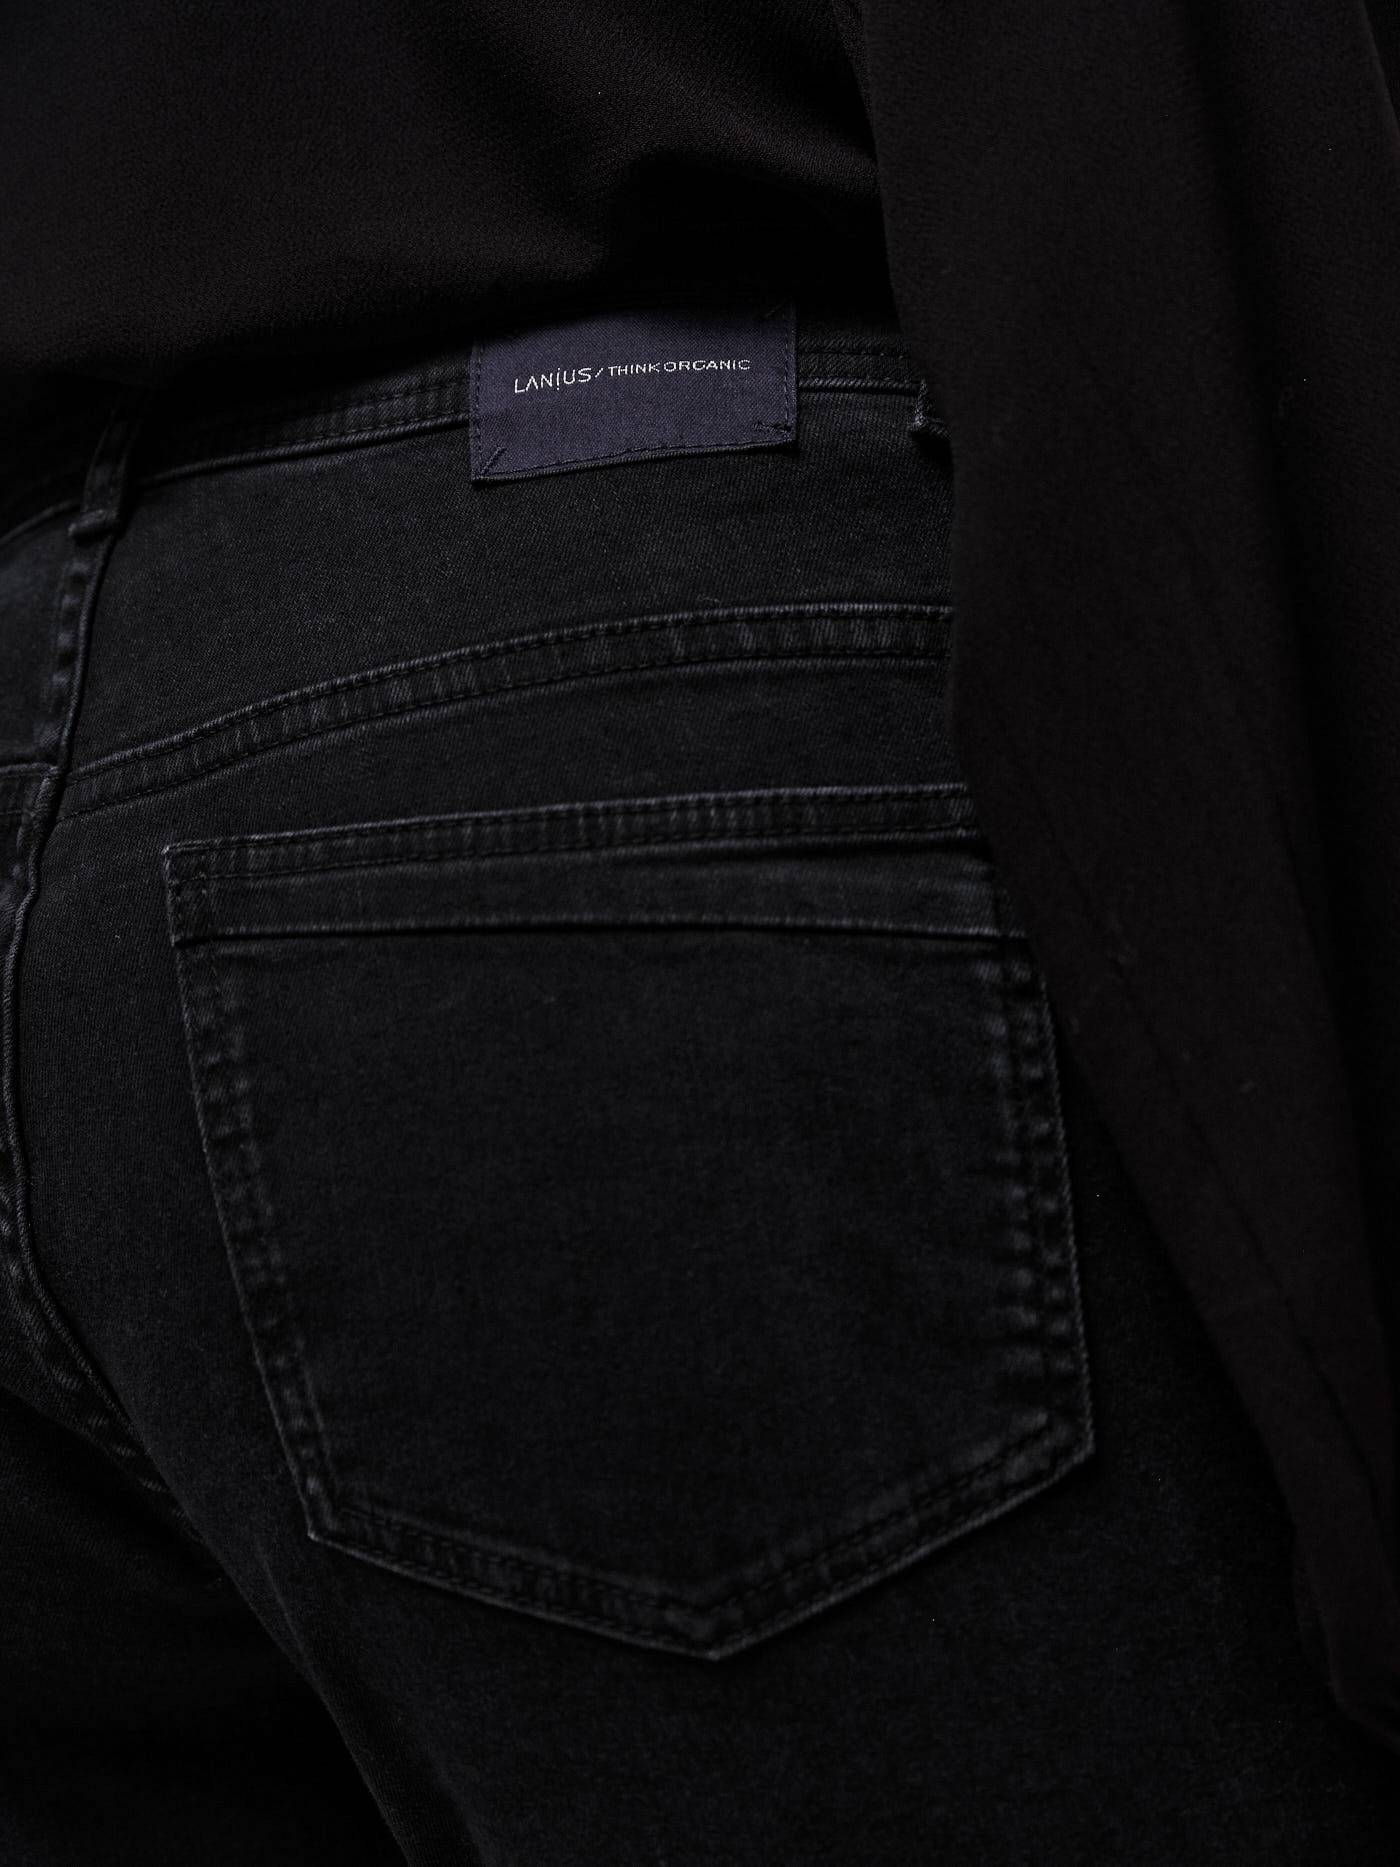 Load image into Gallery viewer, High-Waist Jeans OCS - Black Denim
